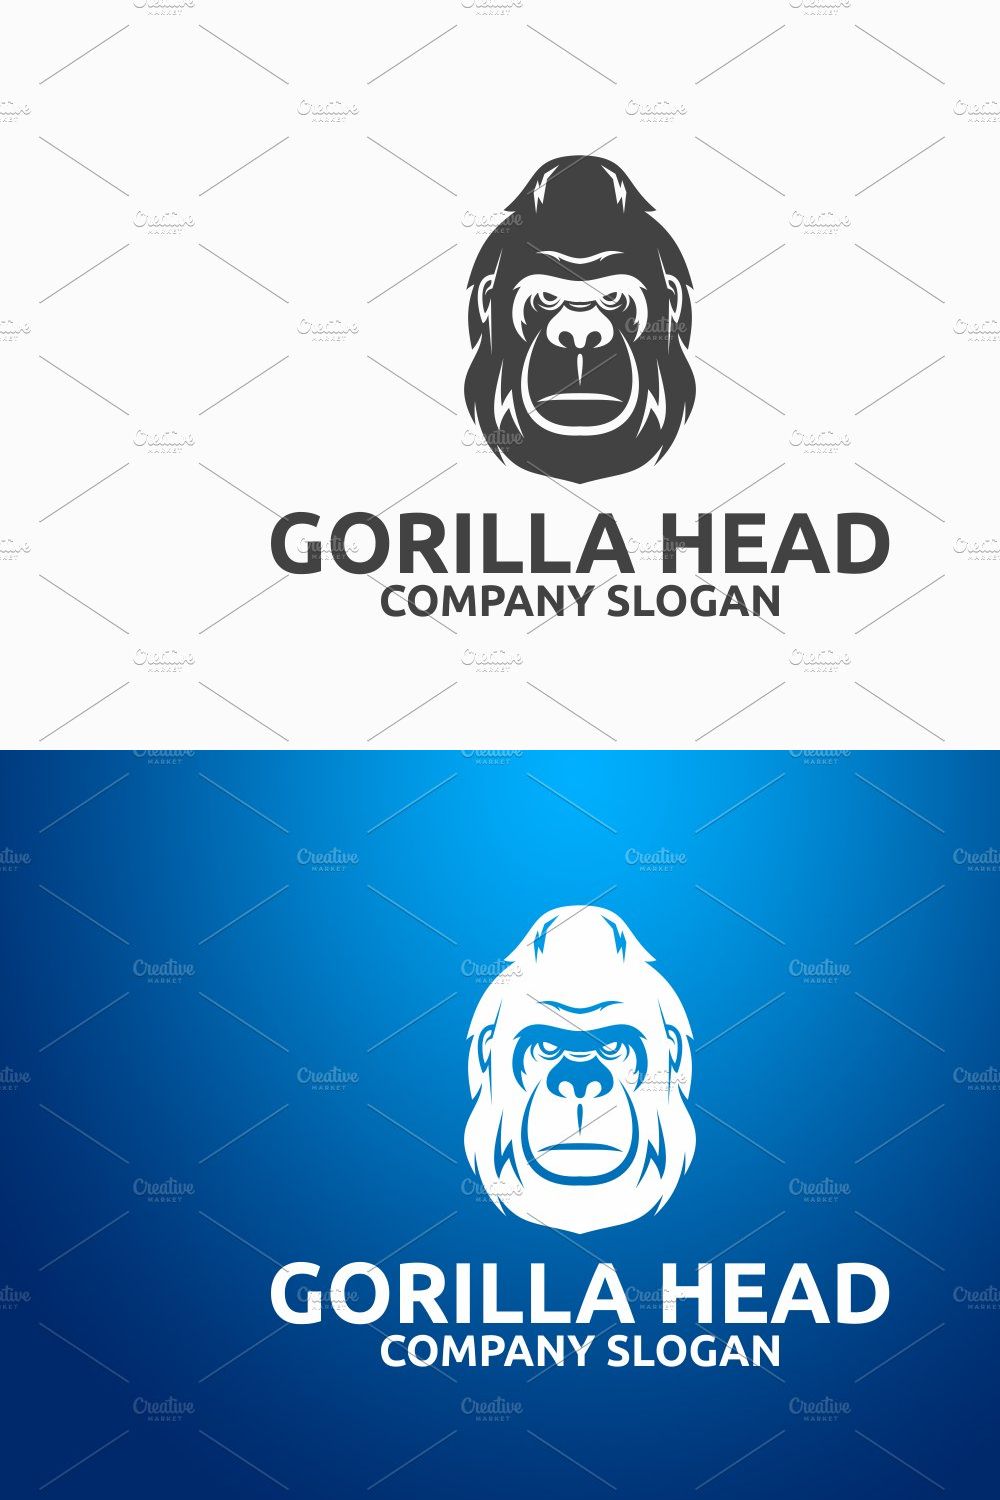 Gorilla Head Logo pinterest preview image.